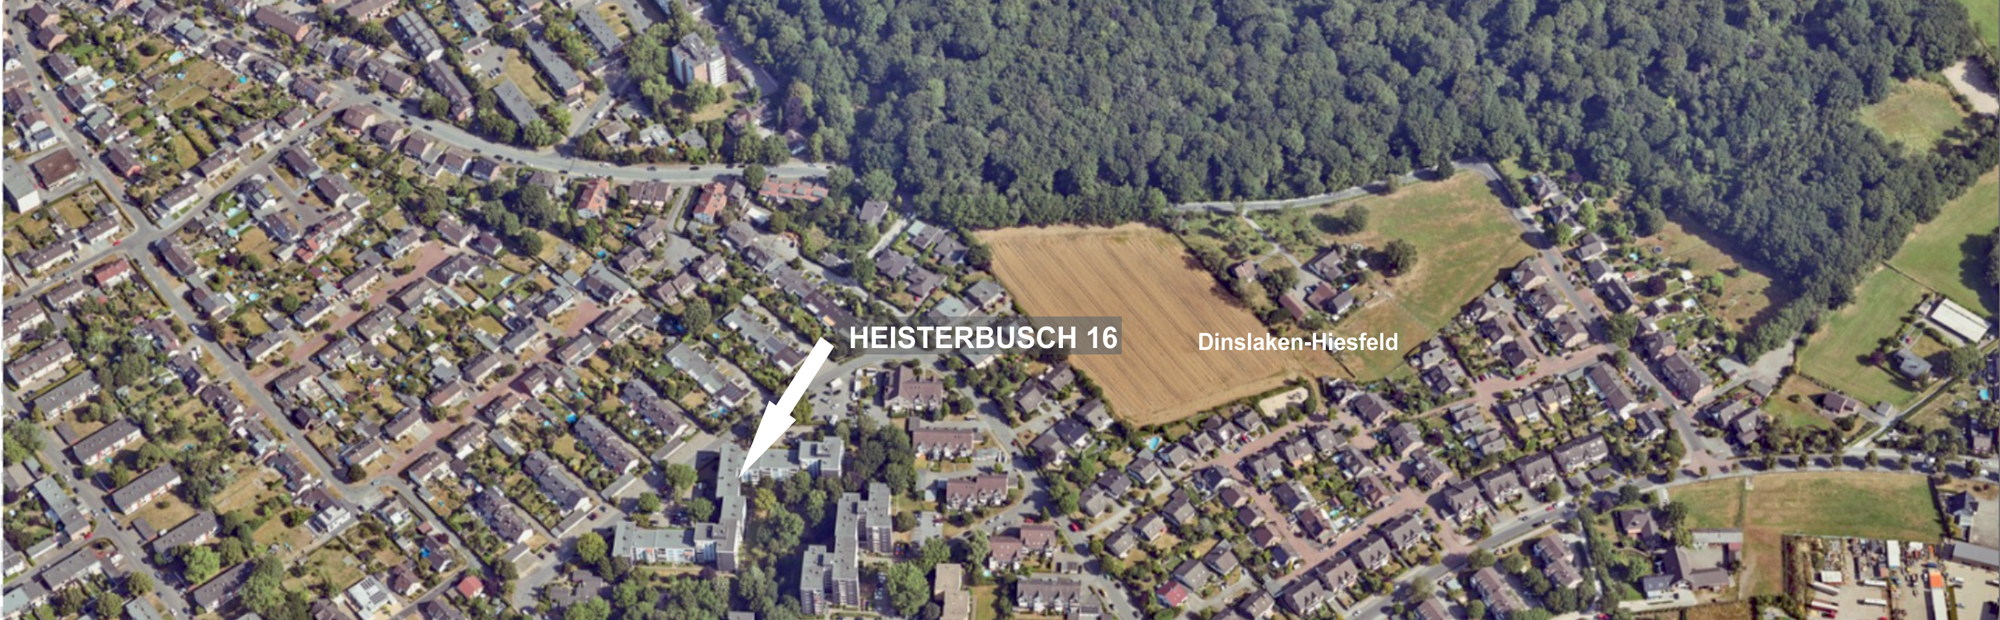 92qm Eigentumswohnung " Heister 16"  in Dinslaken-Hiesfeld